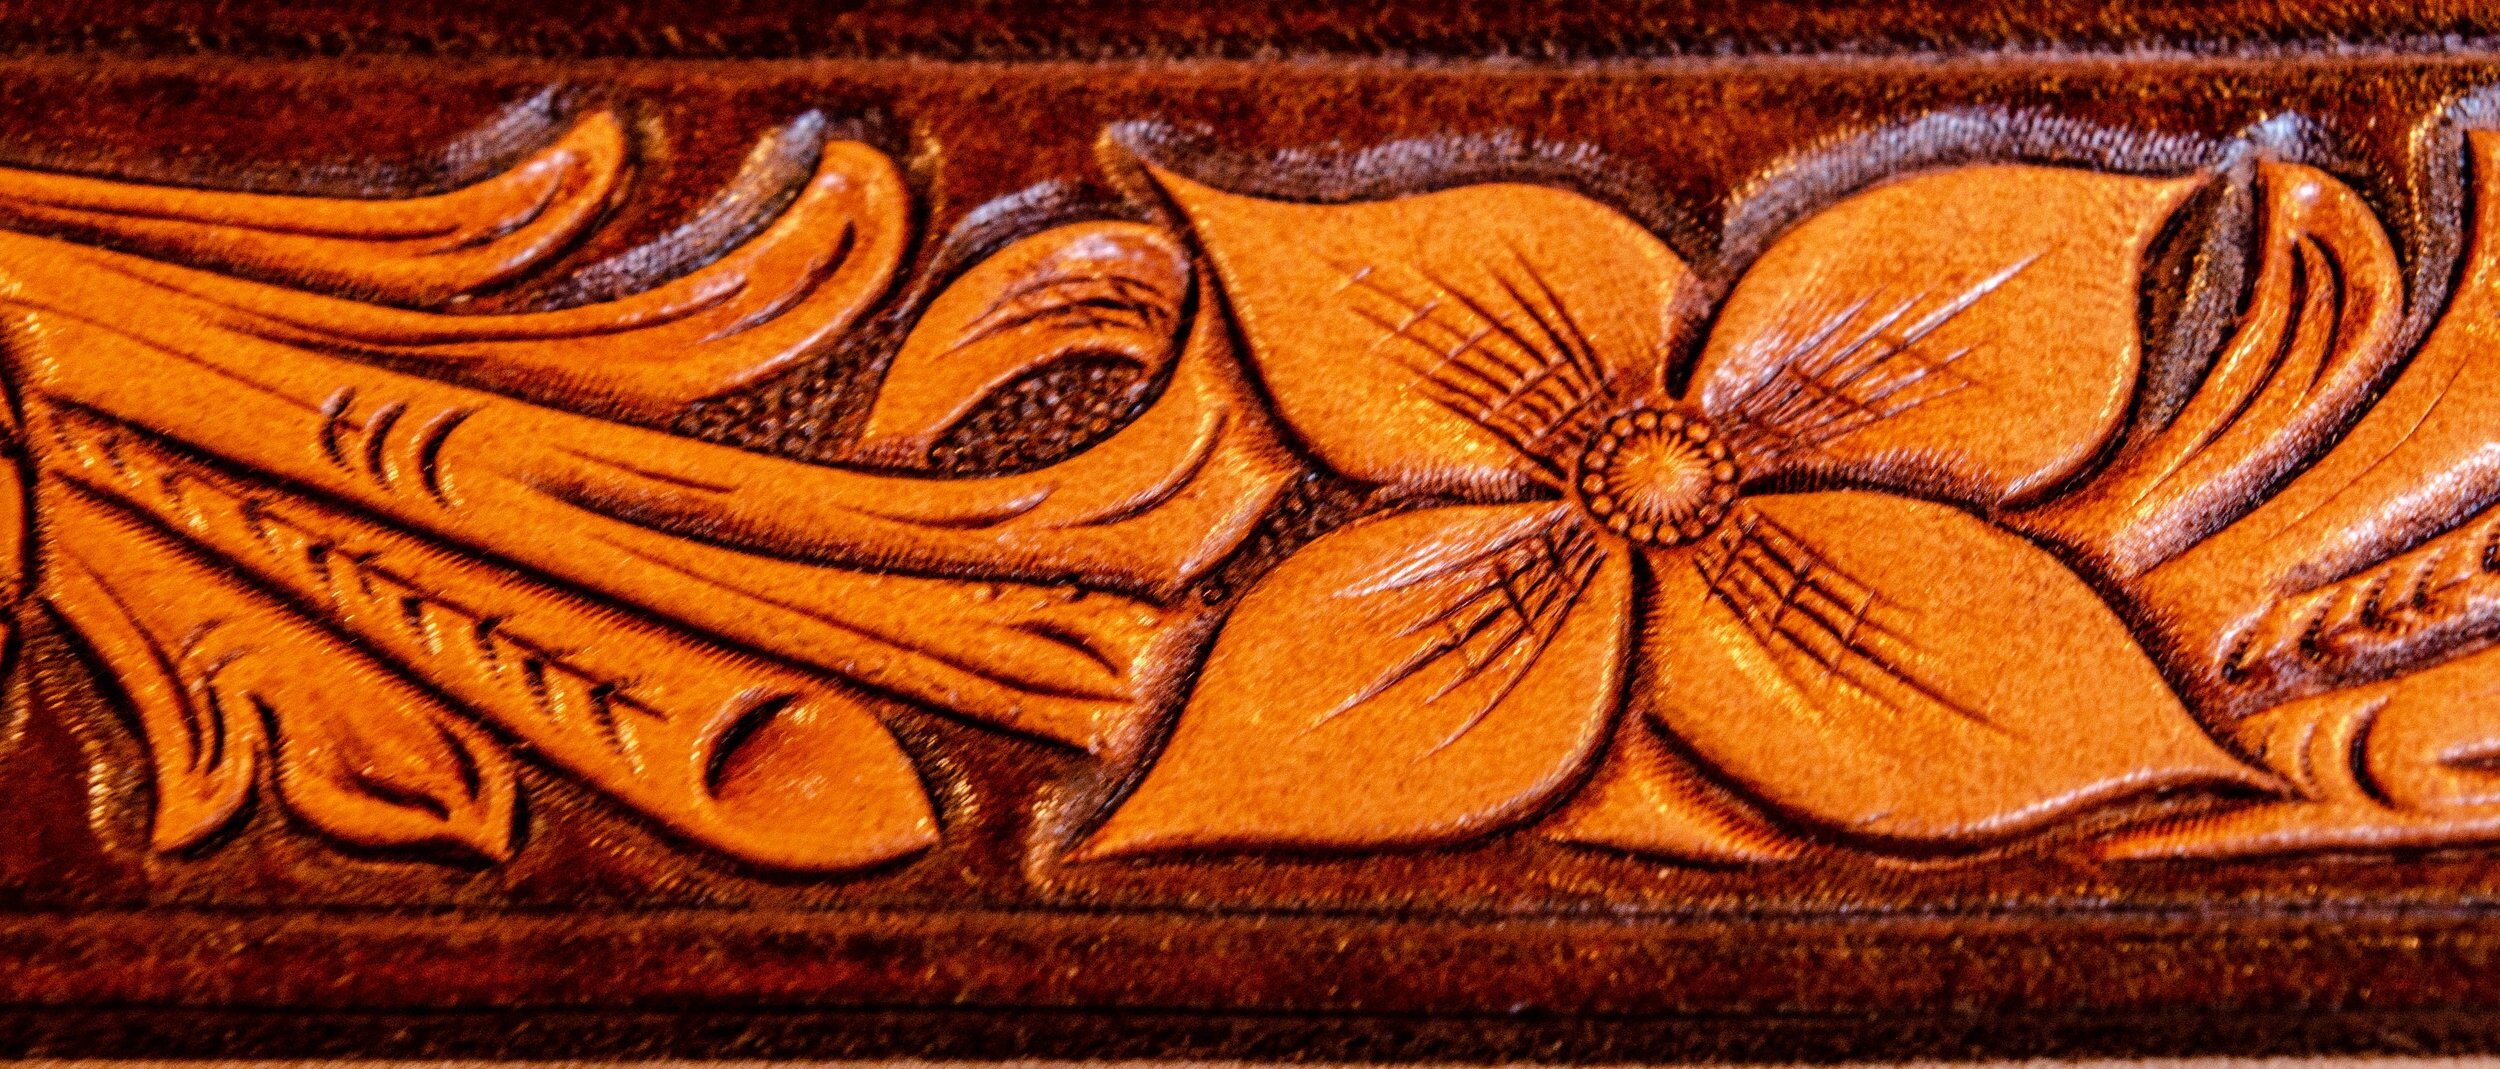 Floral carved belt by Alden's School of Leather